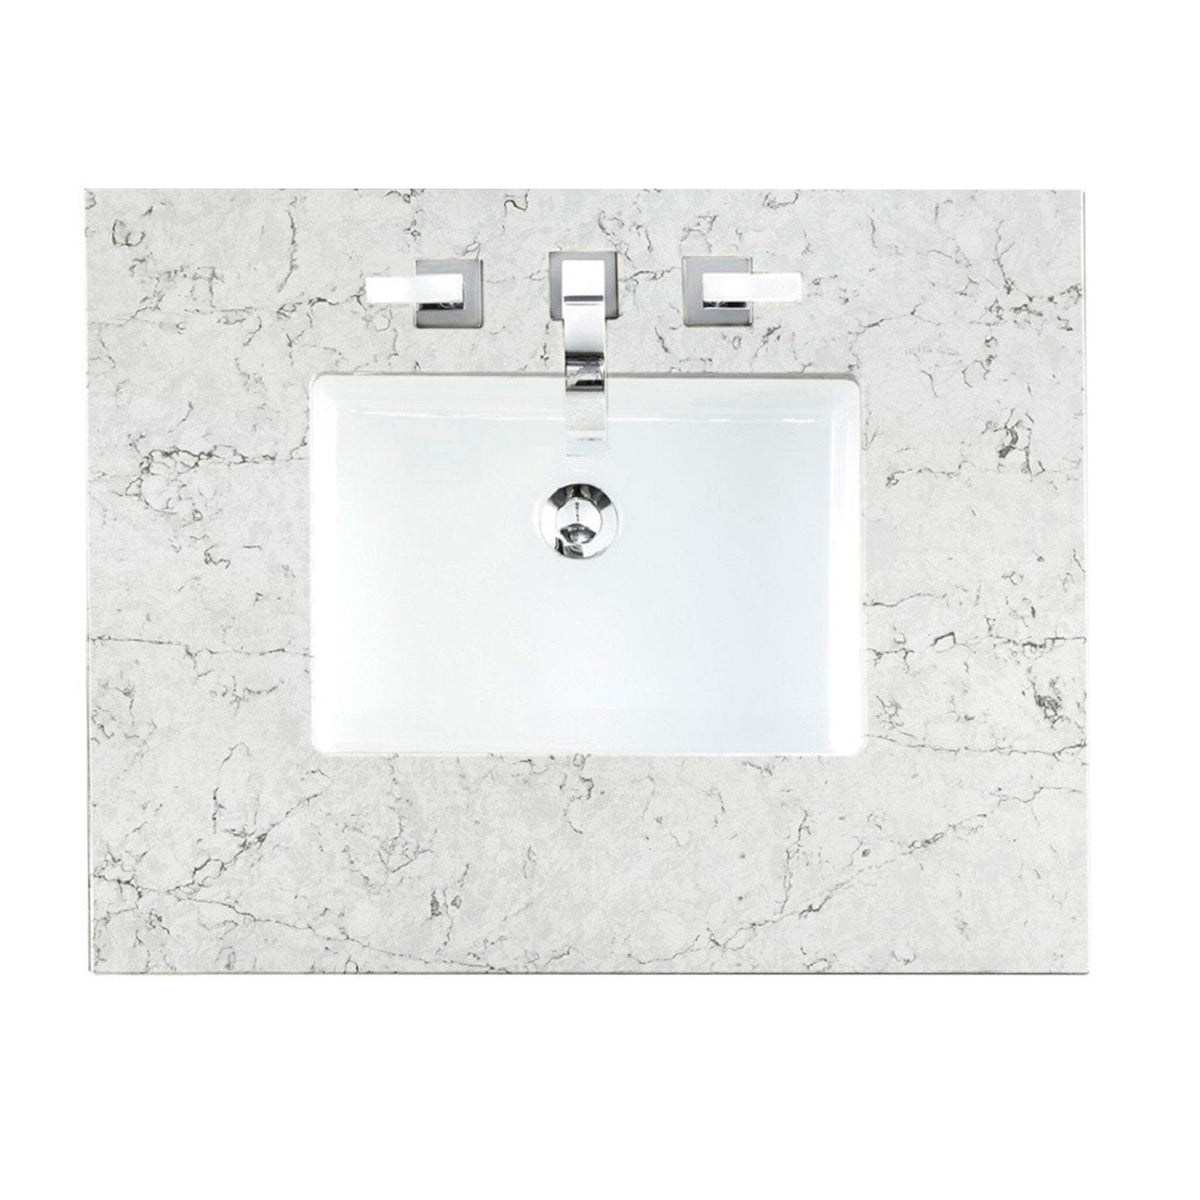 132" De Soto Bright White Double Sink Bathroom Vanity Suite with 3 cm Eternal Jasmine Pearl Quartz Top